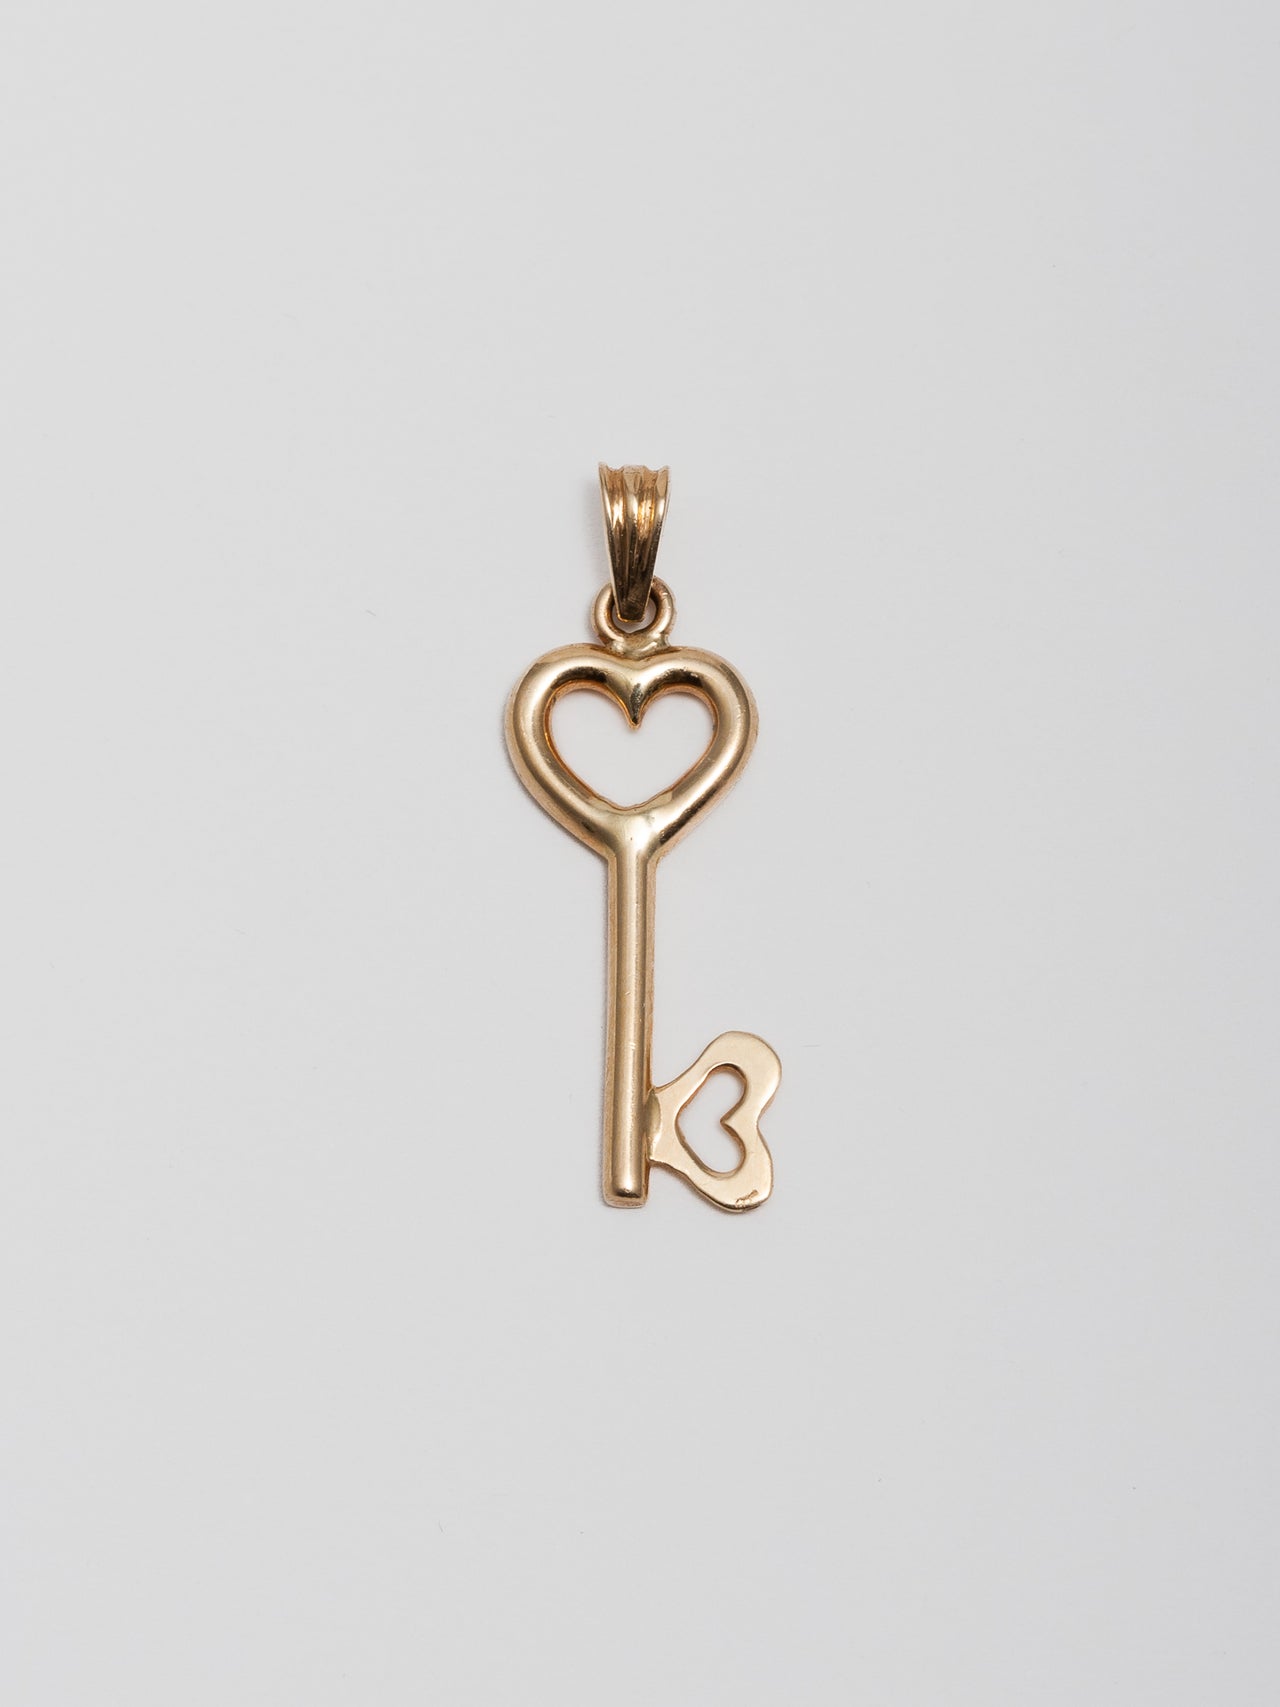 Gold key pendant